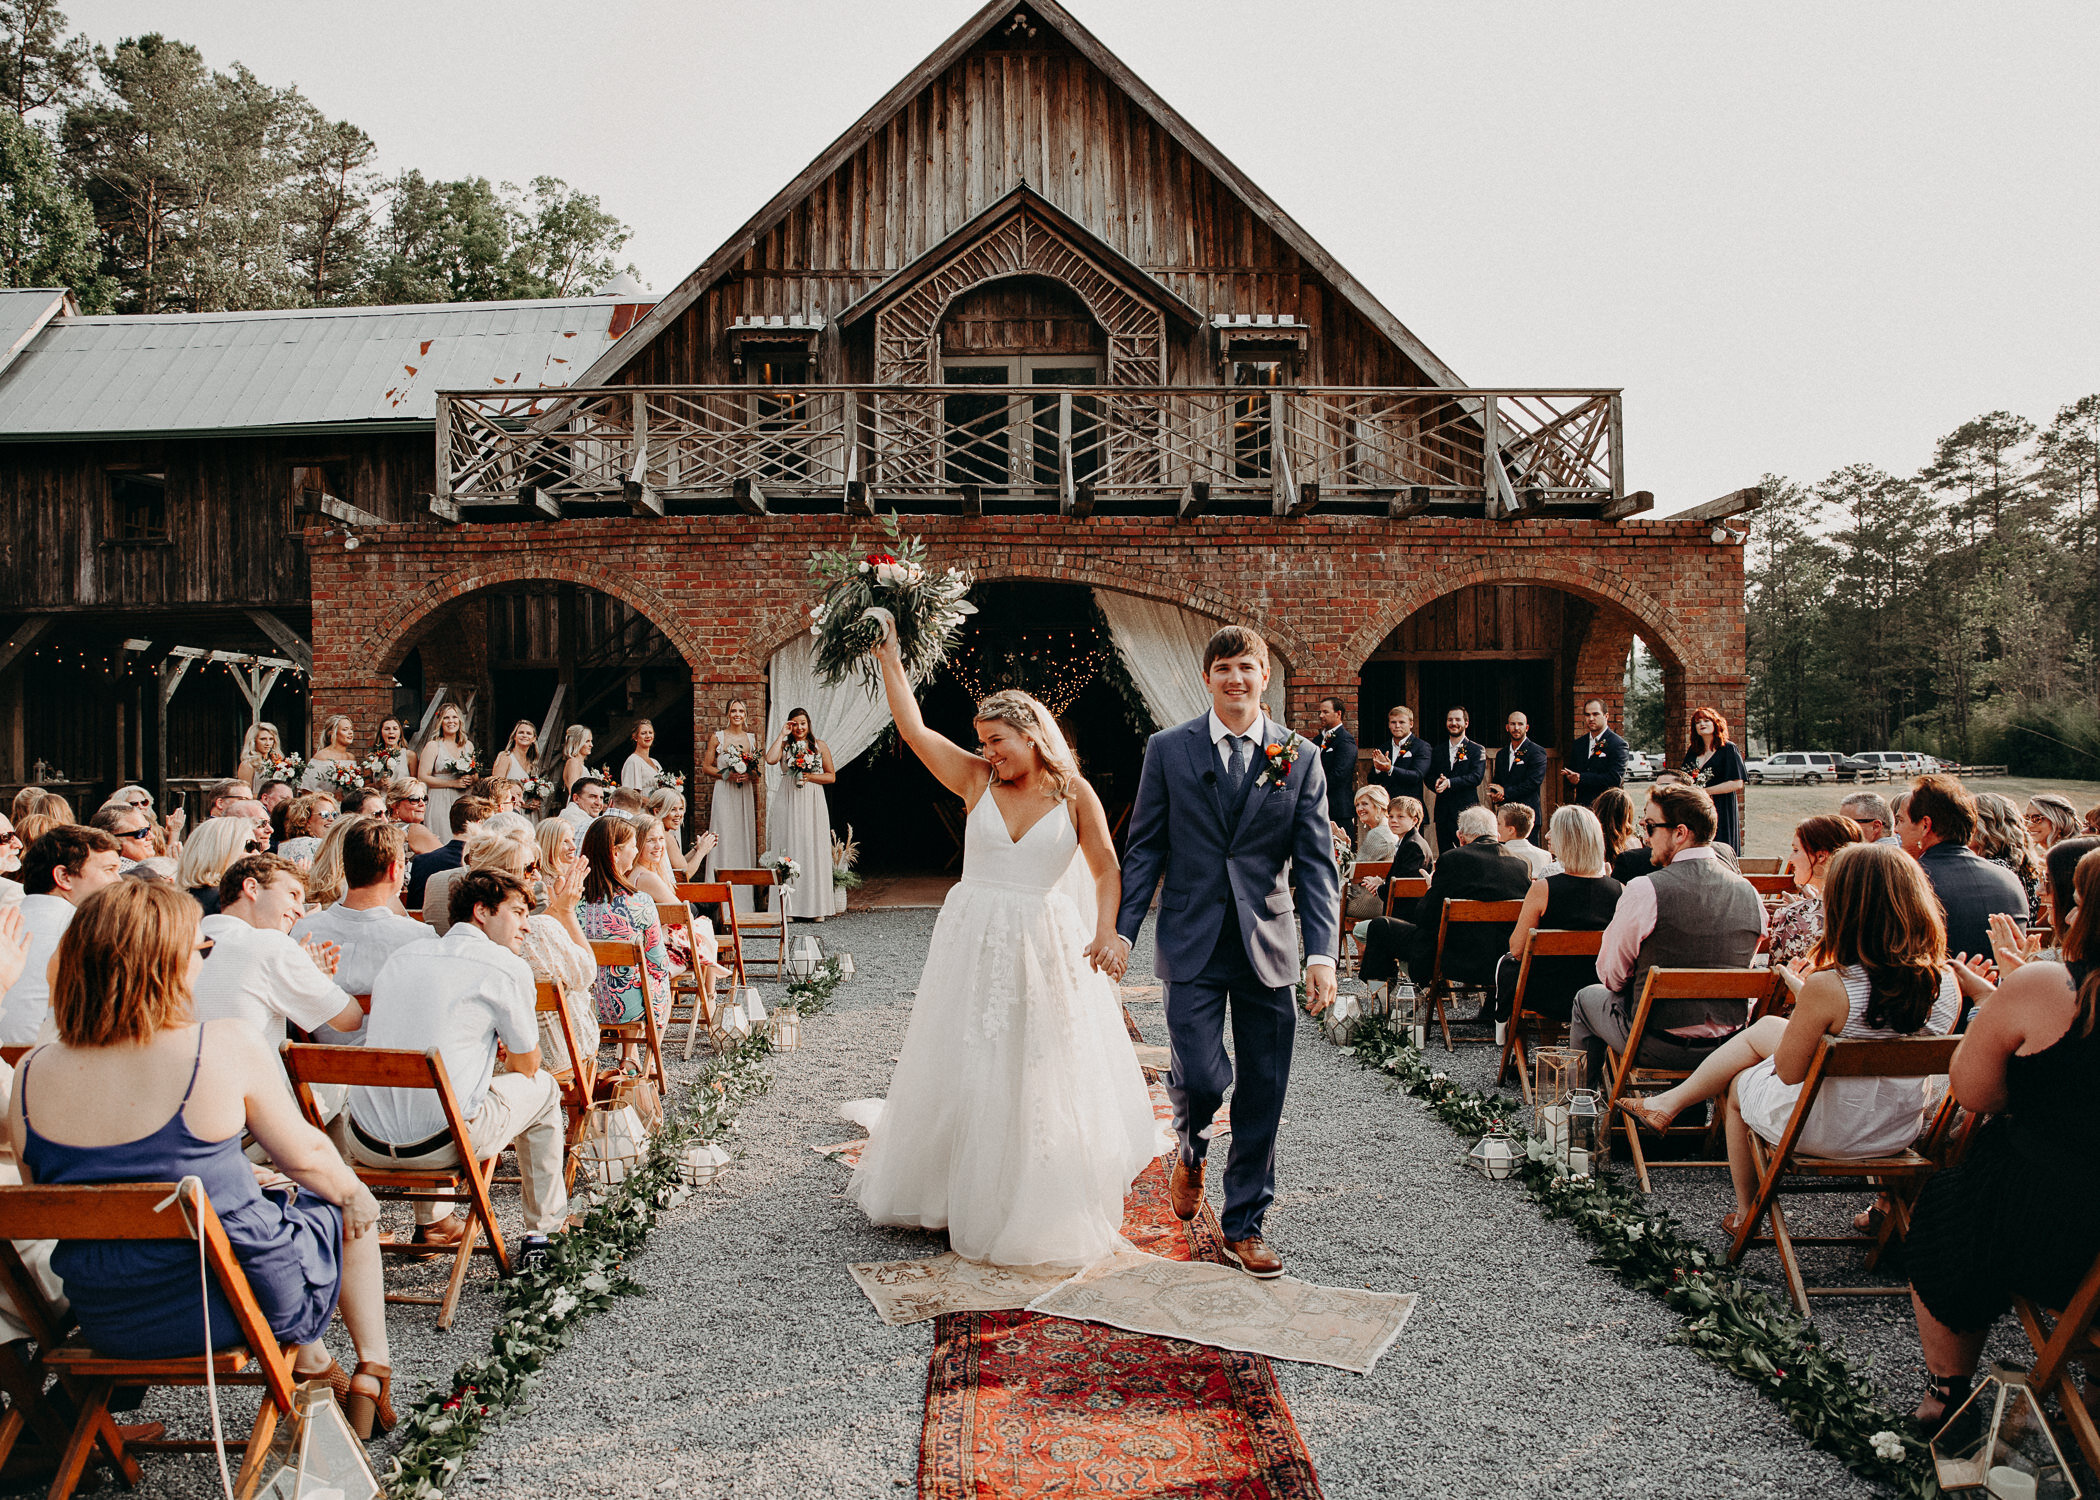 Atlanta_Wedding Day || The Farm at Rome-Ga, Aline Marin Photography74.jpg